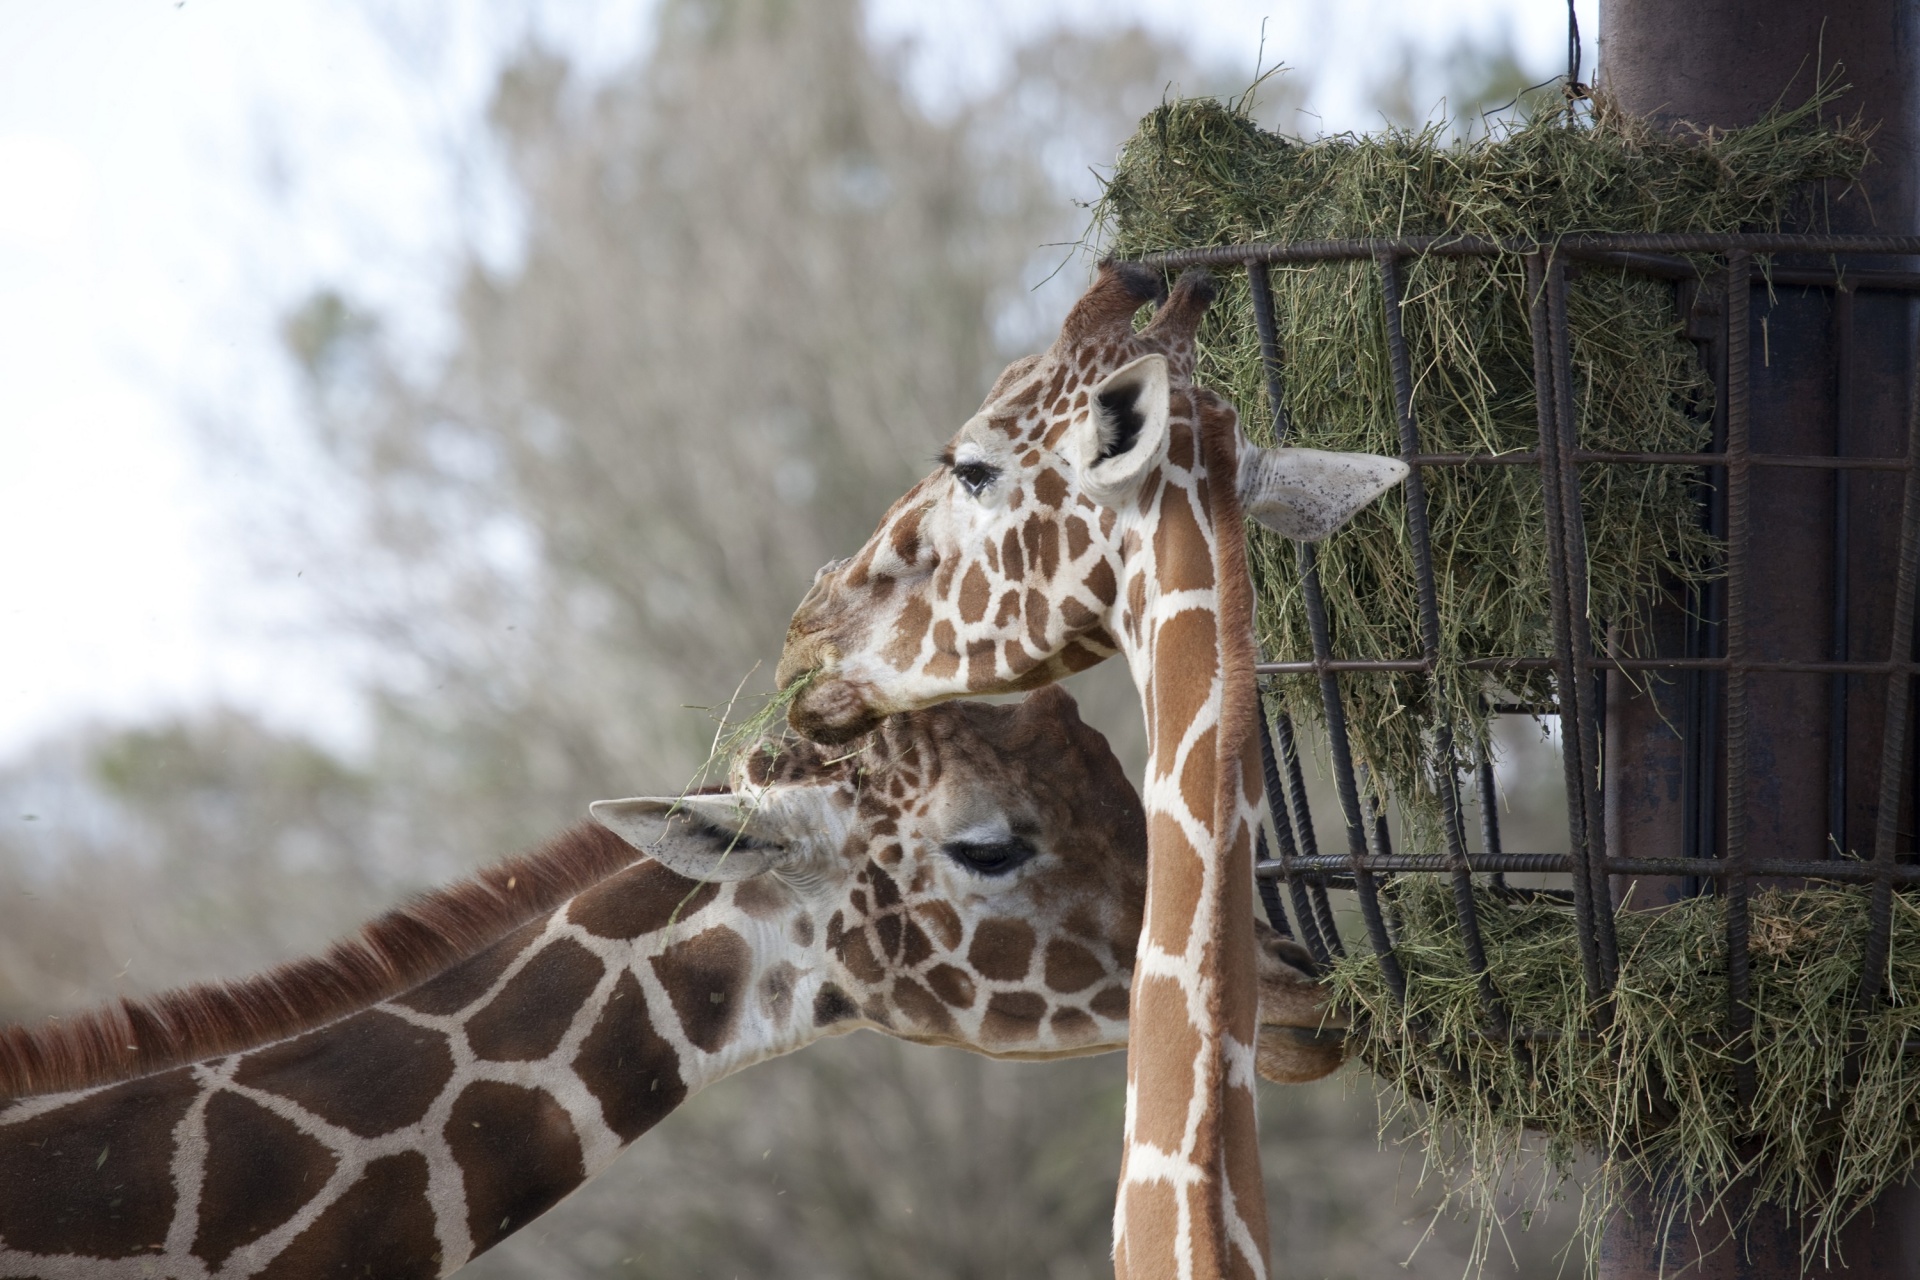 Two giraffes feeding on hay in their zoo enclosure